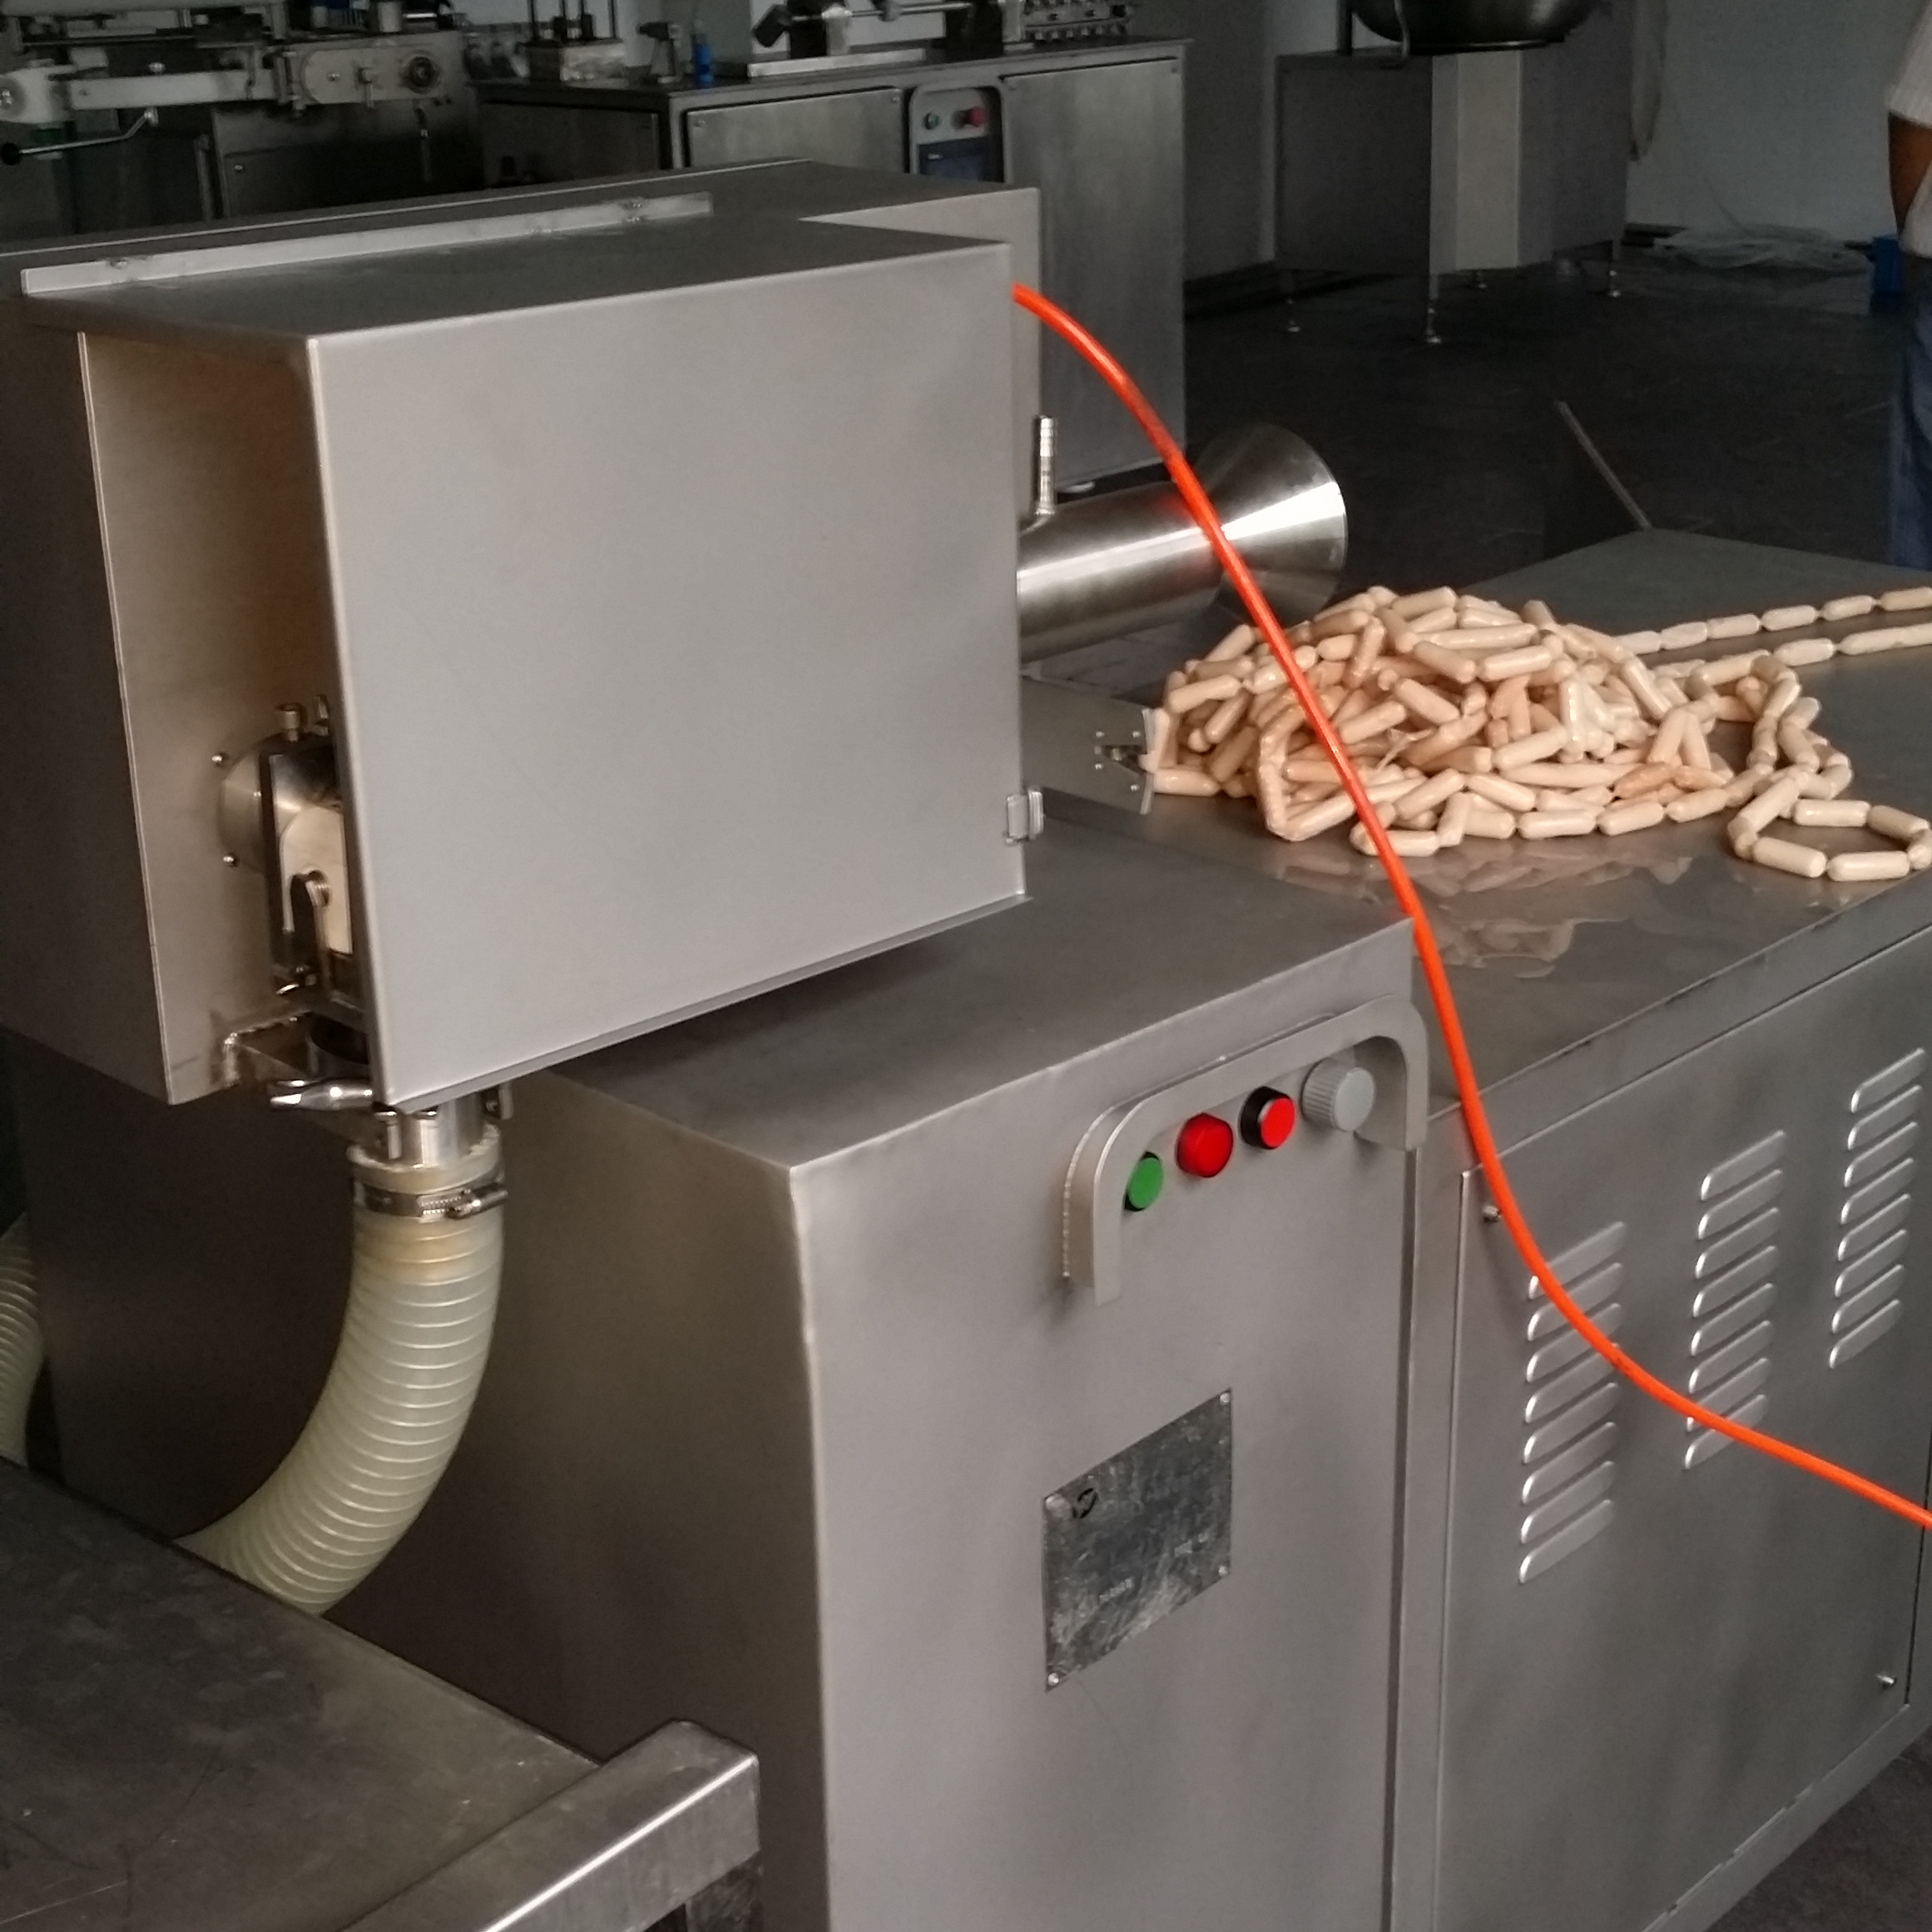 helped machinery sausage slicing machine for sausage  peeler